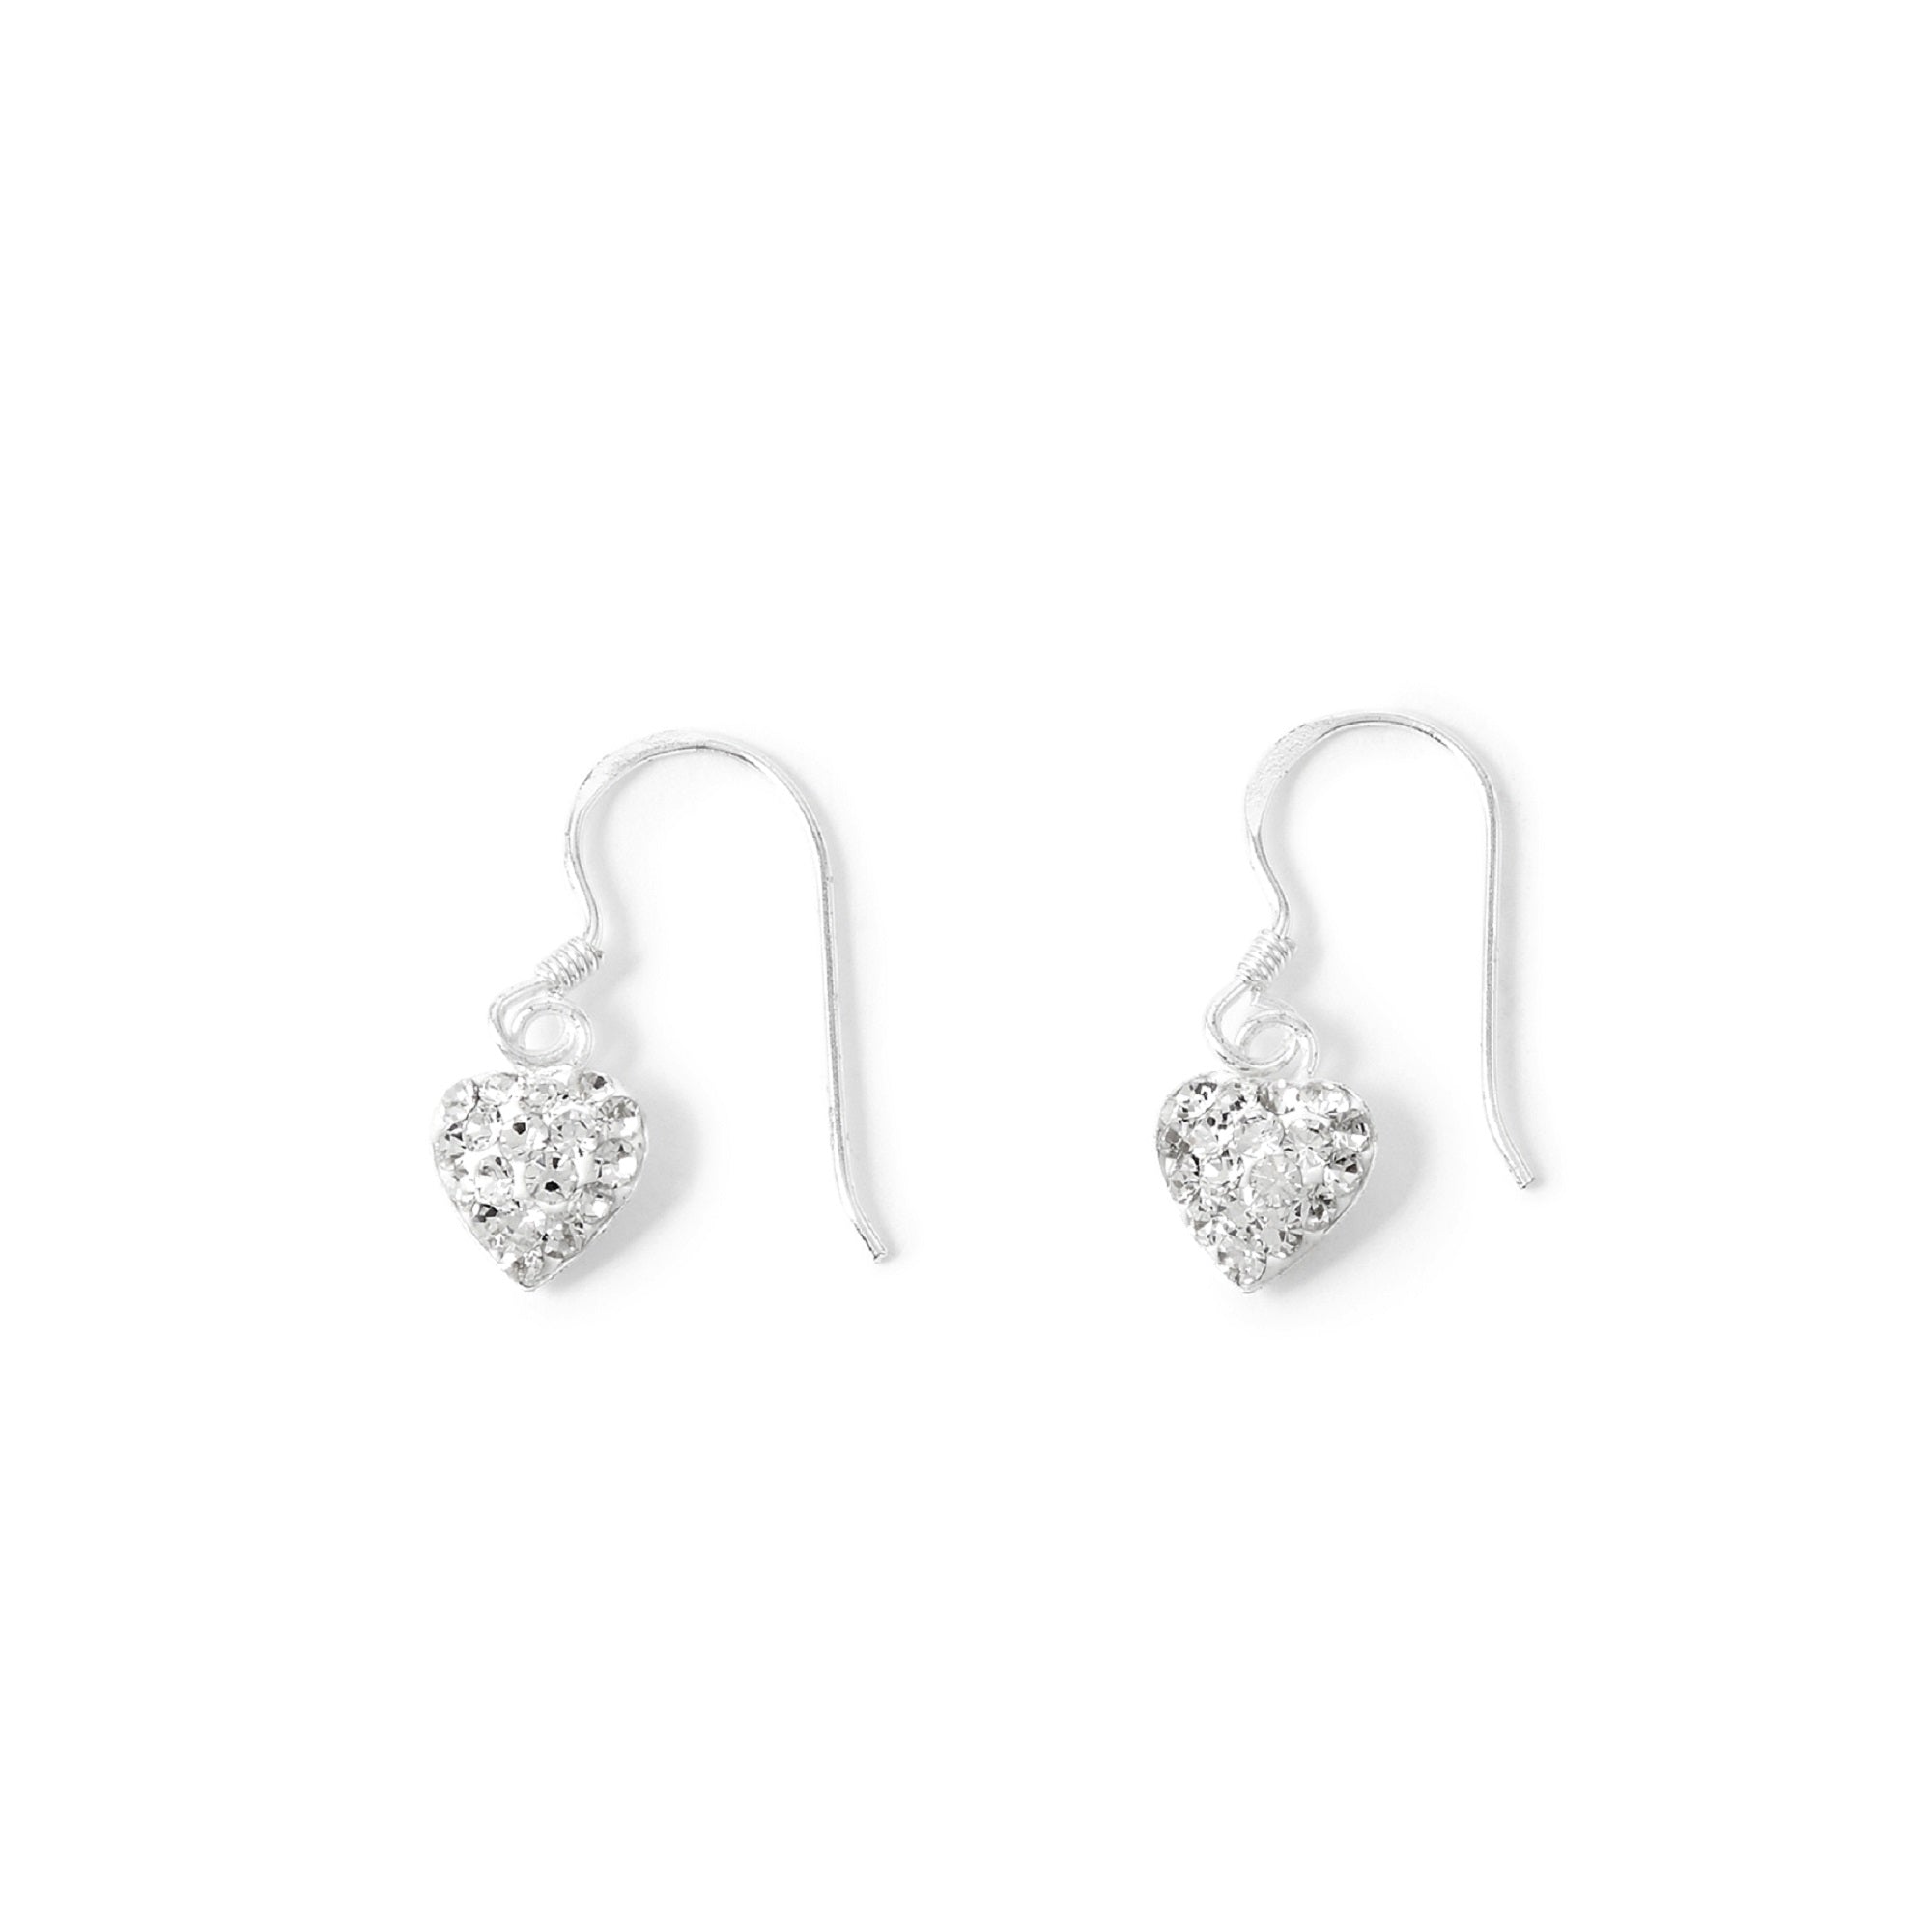 Givenchy Blue Stone Crystal Drop Earrings | Dillard's